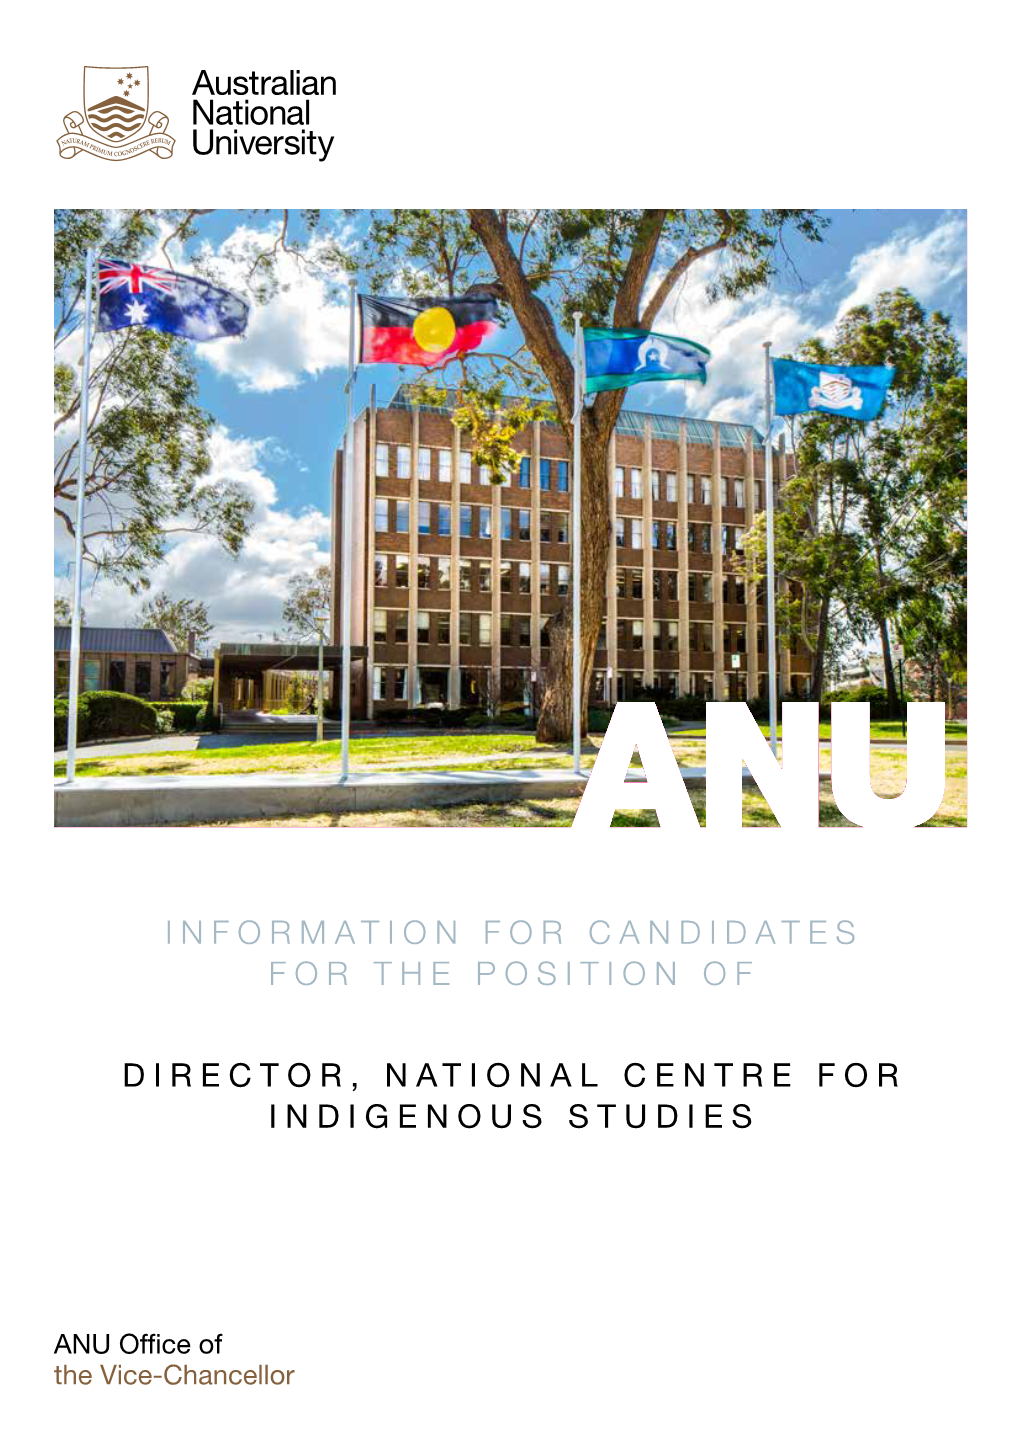 Director, National Centre for Indigenous Studies